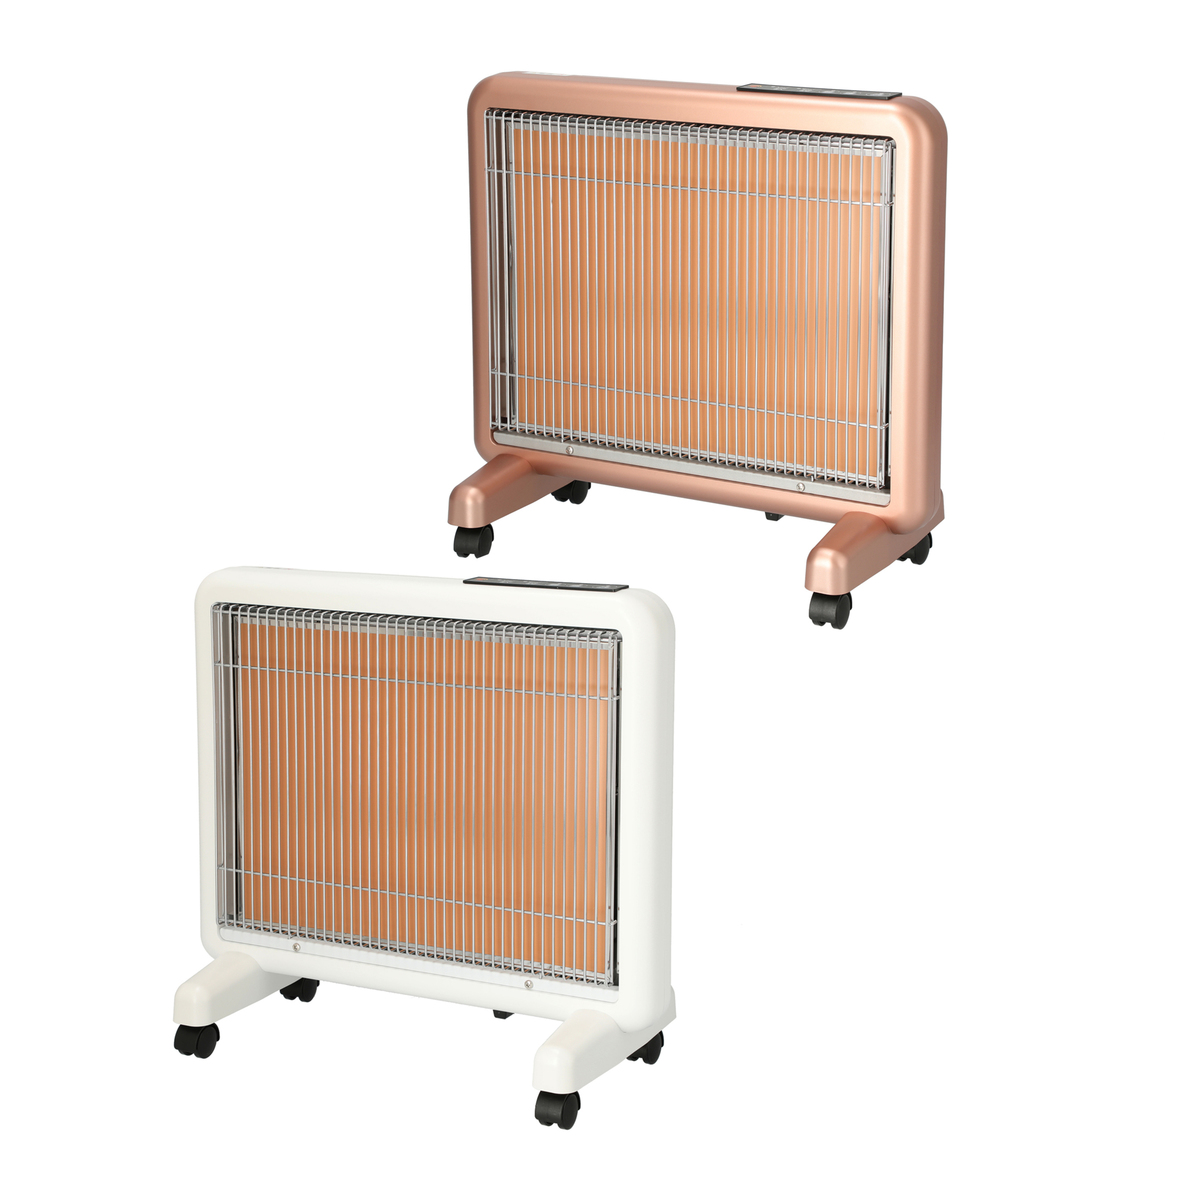 遠赤外線暖房器 サンルミエ 暖炉型速暖 日本遠赤外線株式会社 - 冷暖房 